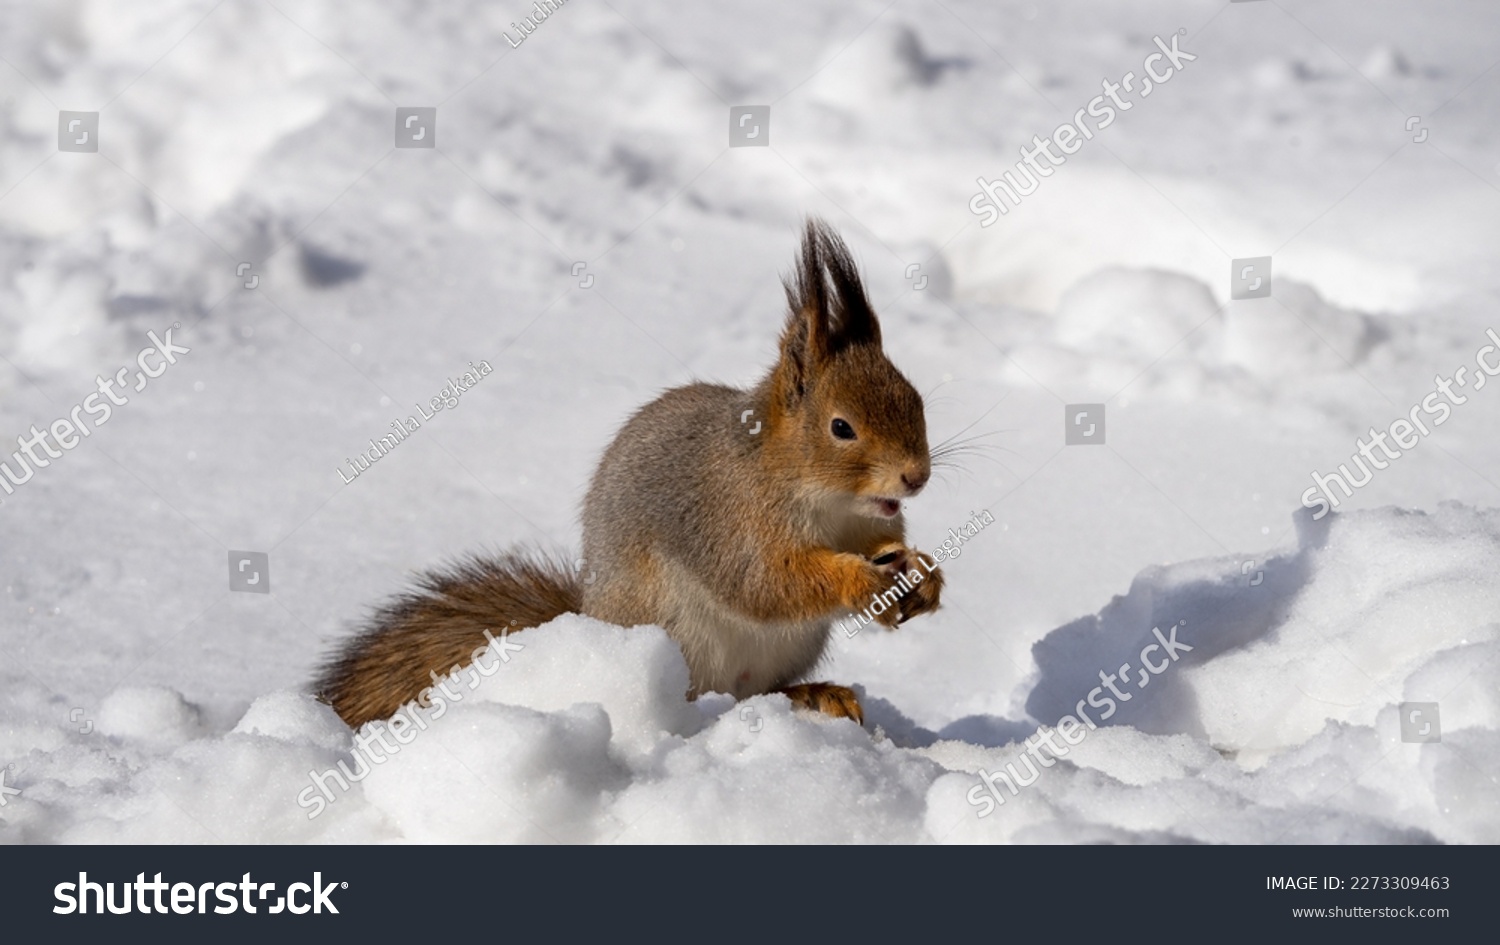 Eurasian squirrel (Sciurus vulgaris) eating a hazelnut in a winter forest. #2273309463